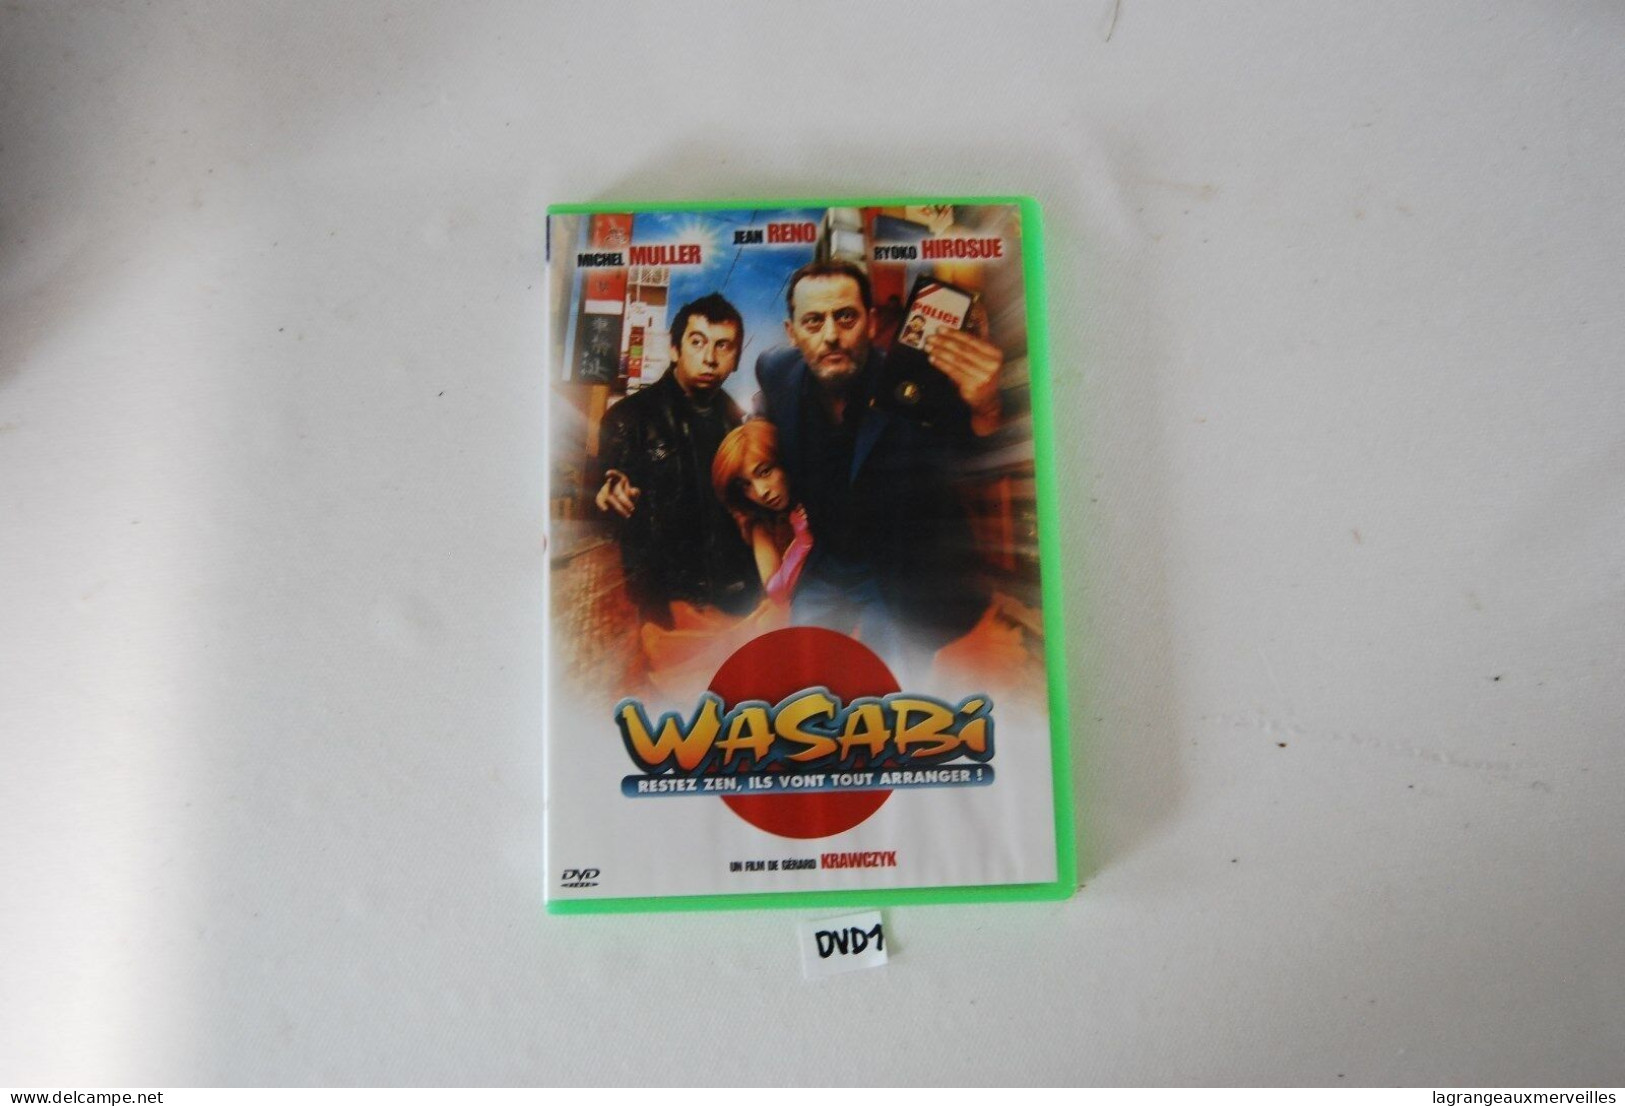 DVD 1 - WASABI - JEAN RENO - Commedia